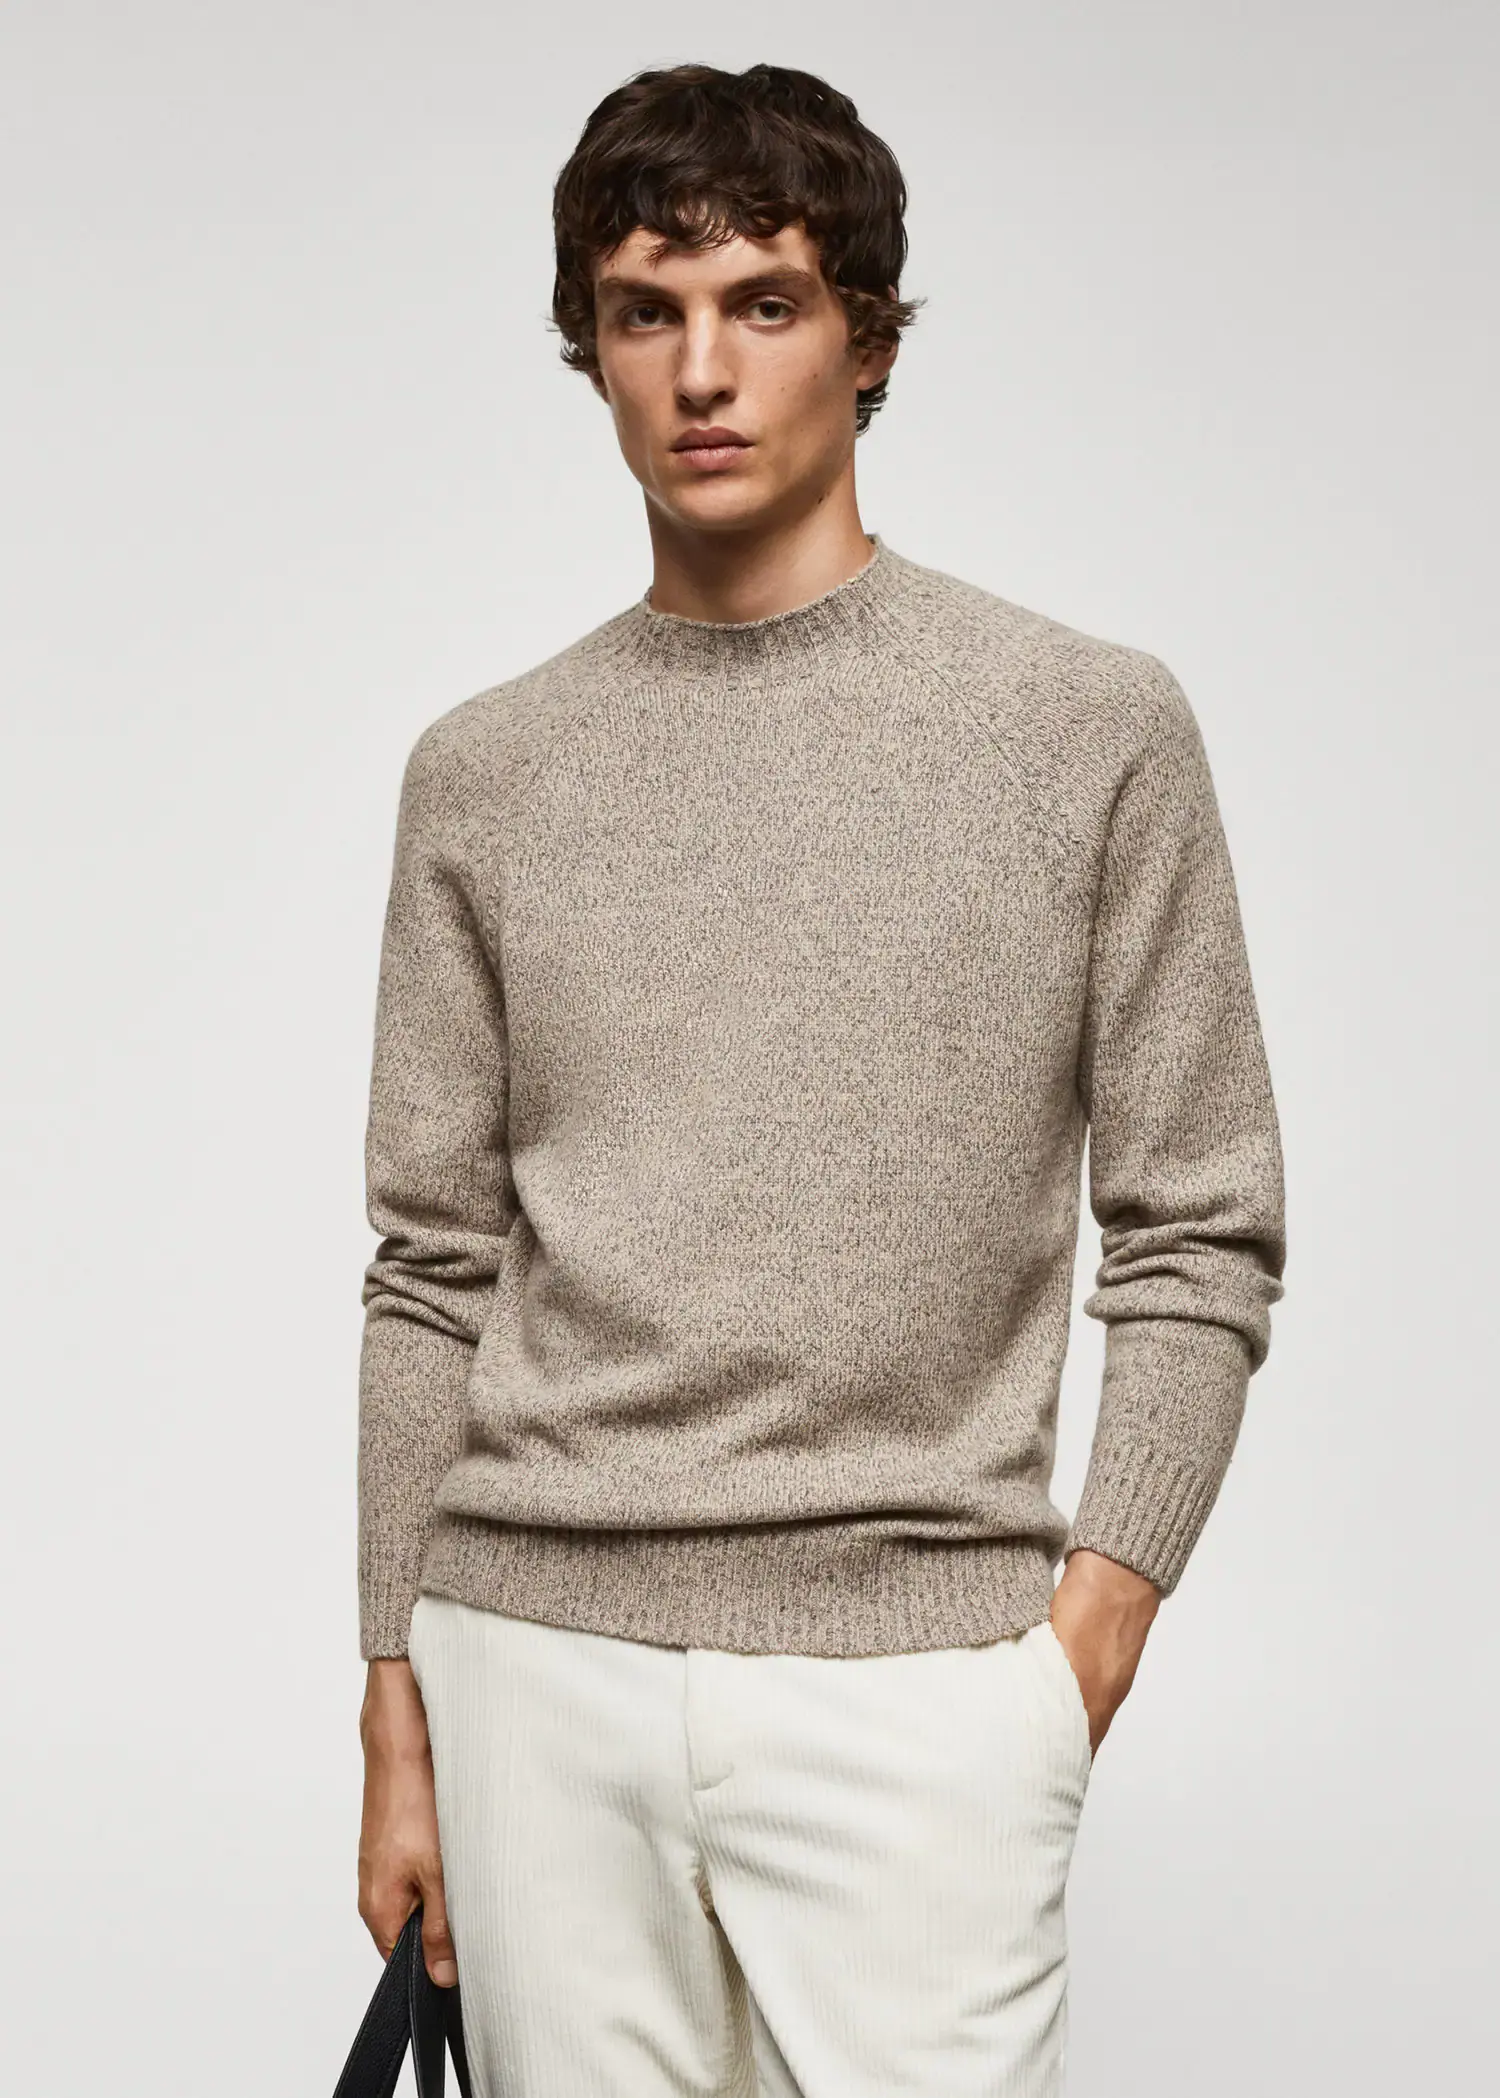 Mango Speckled wool sweater. 2